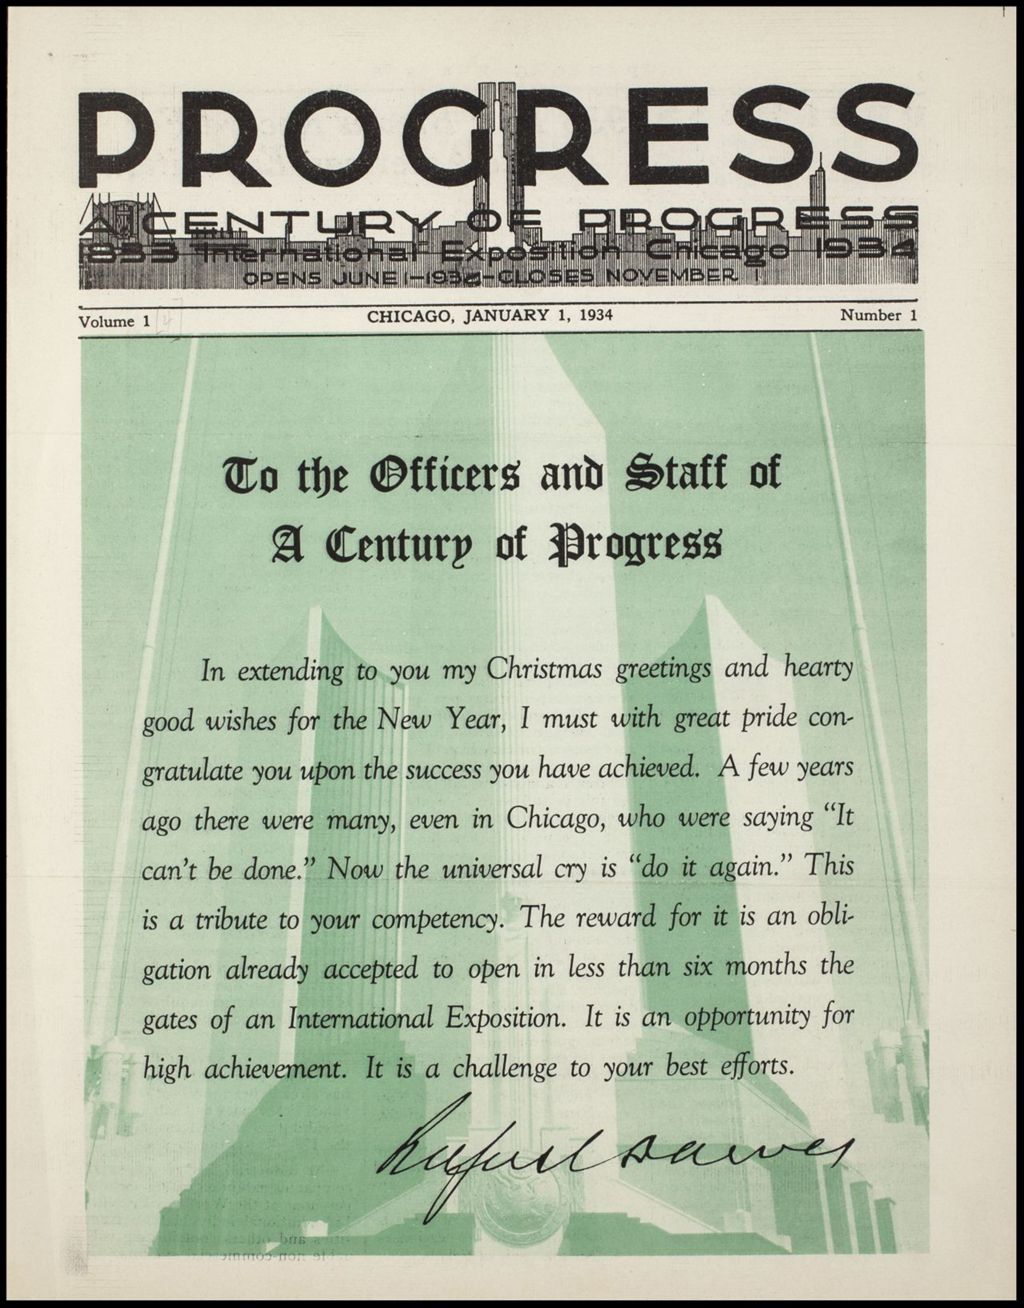 Miniature of Progress, vol. 1, no. 1 , January 1, 1934